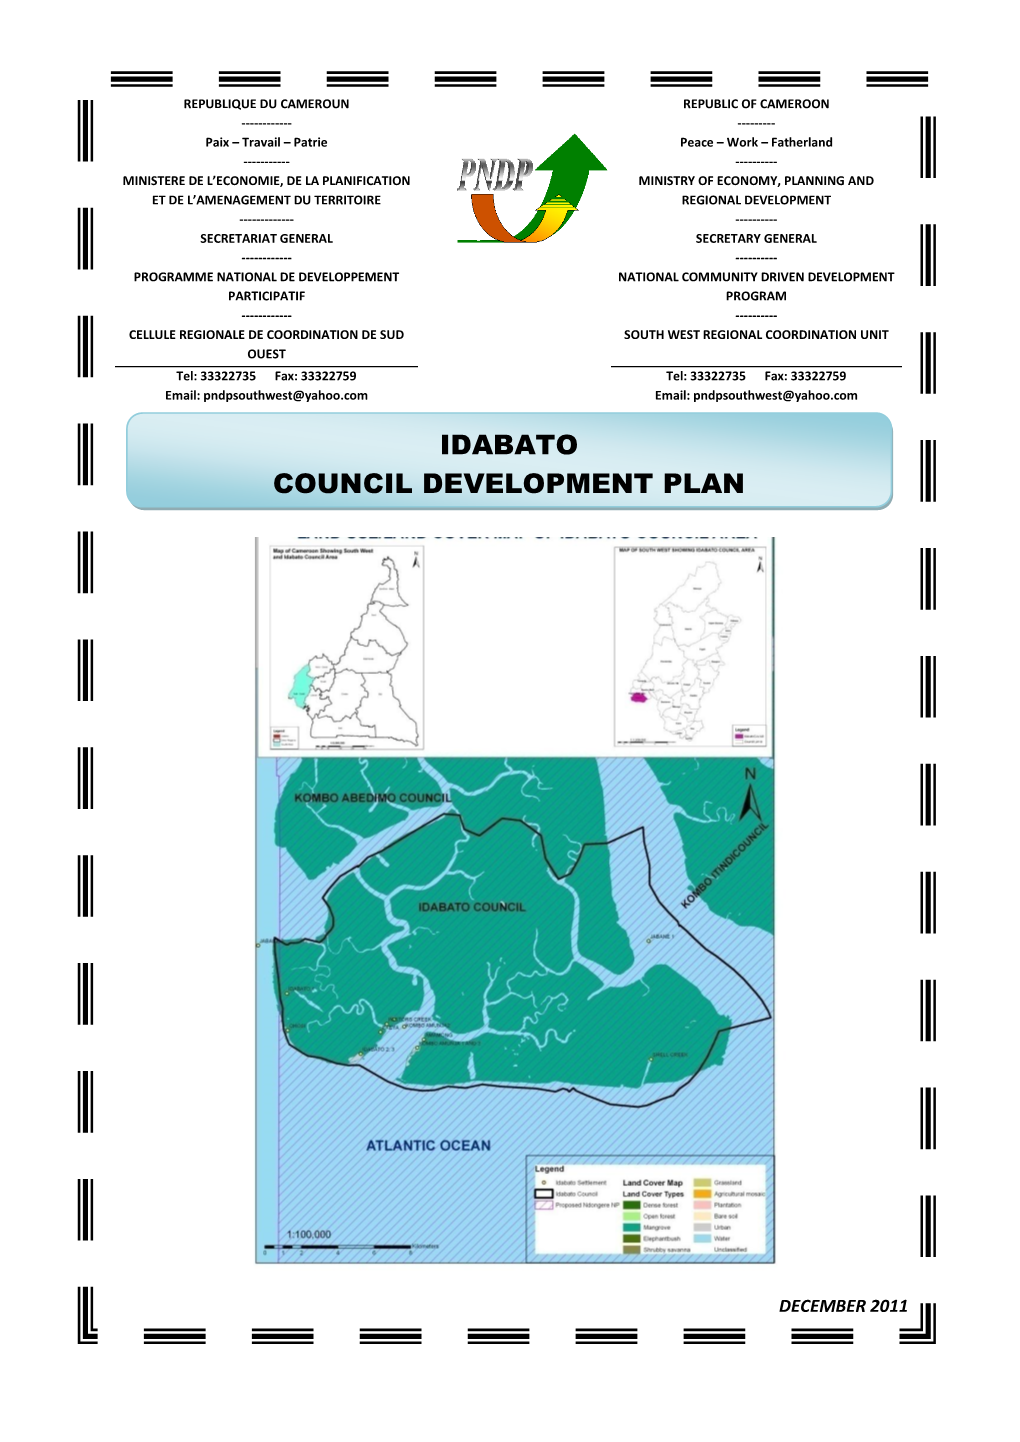 Idabato Council Development Plan